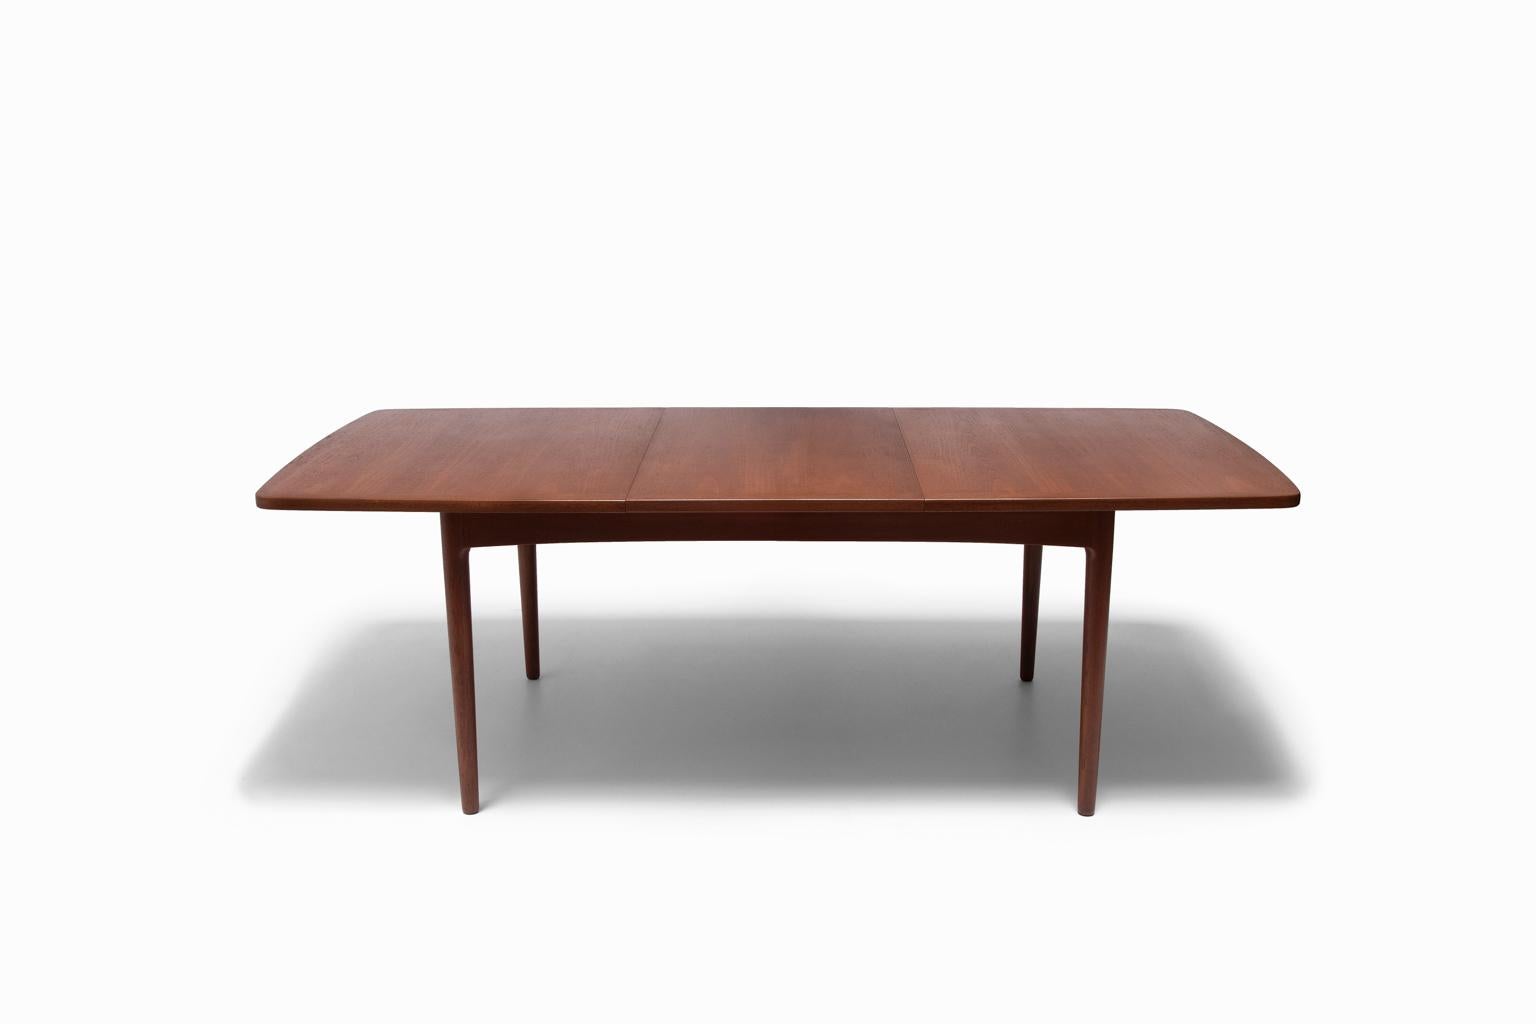 Leather Henrik Worts Erik Worts Danish Mid-Century Modern Mahogany Table & Chairs For Sale